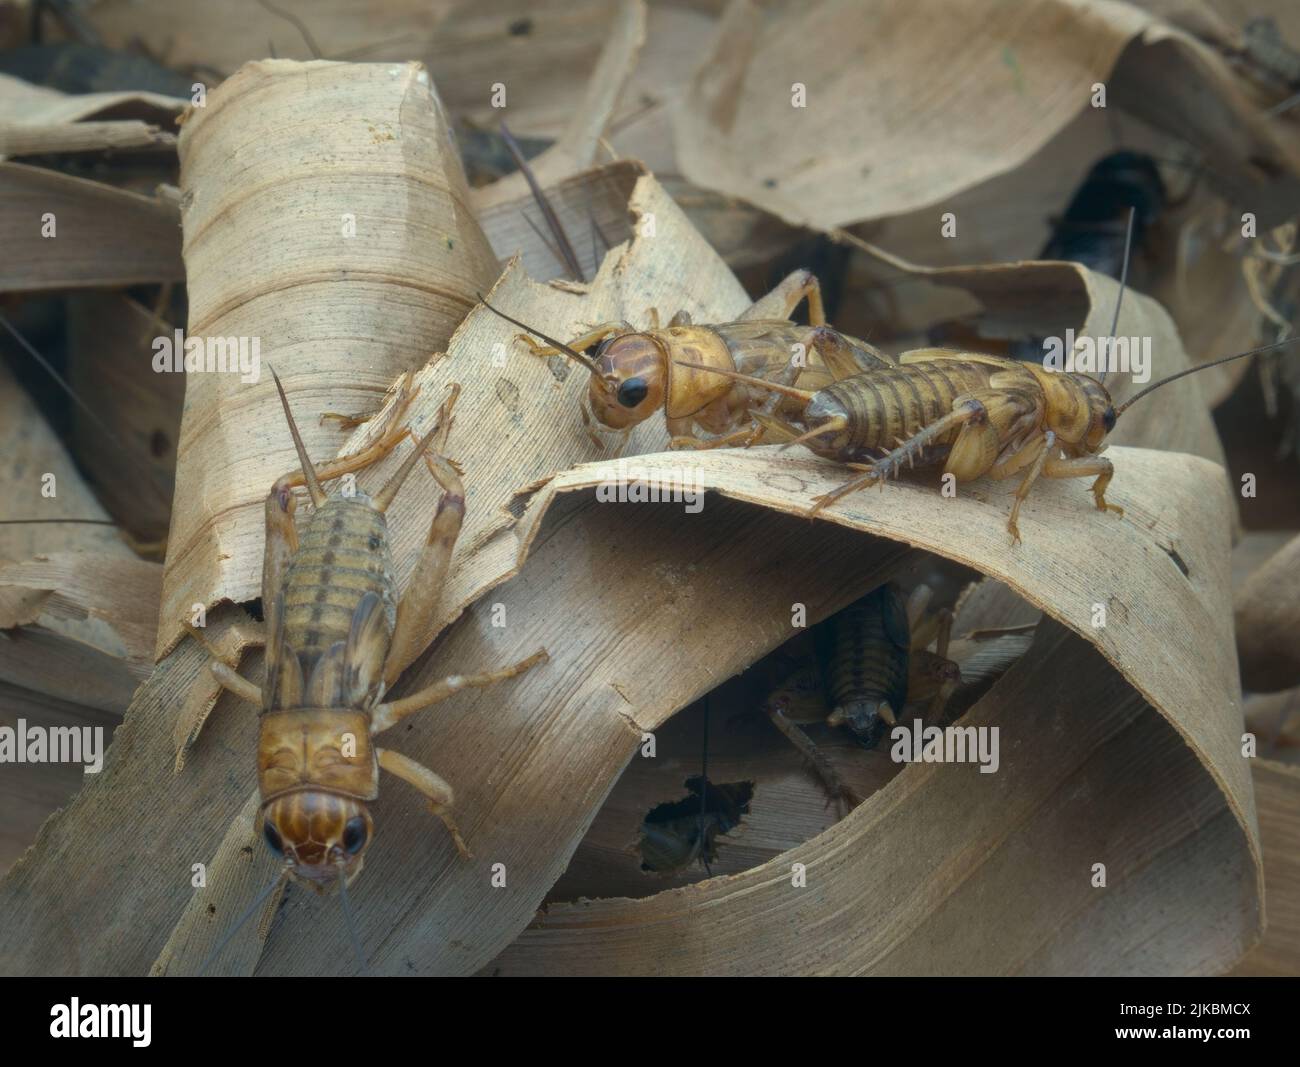 House crickets on dried banana leaves Stock Photo